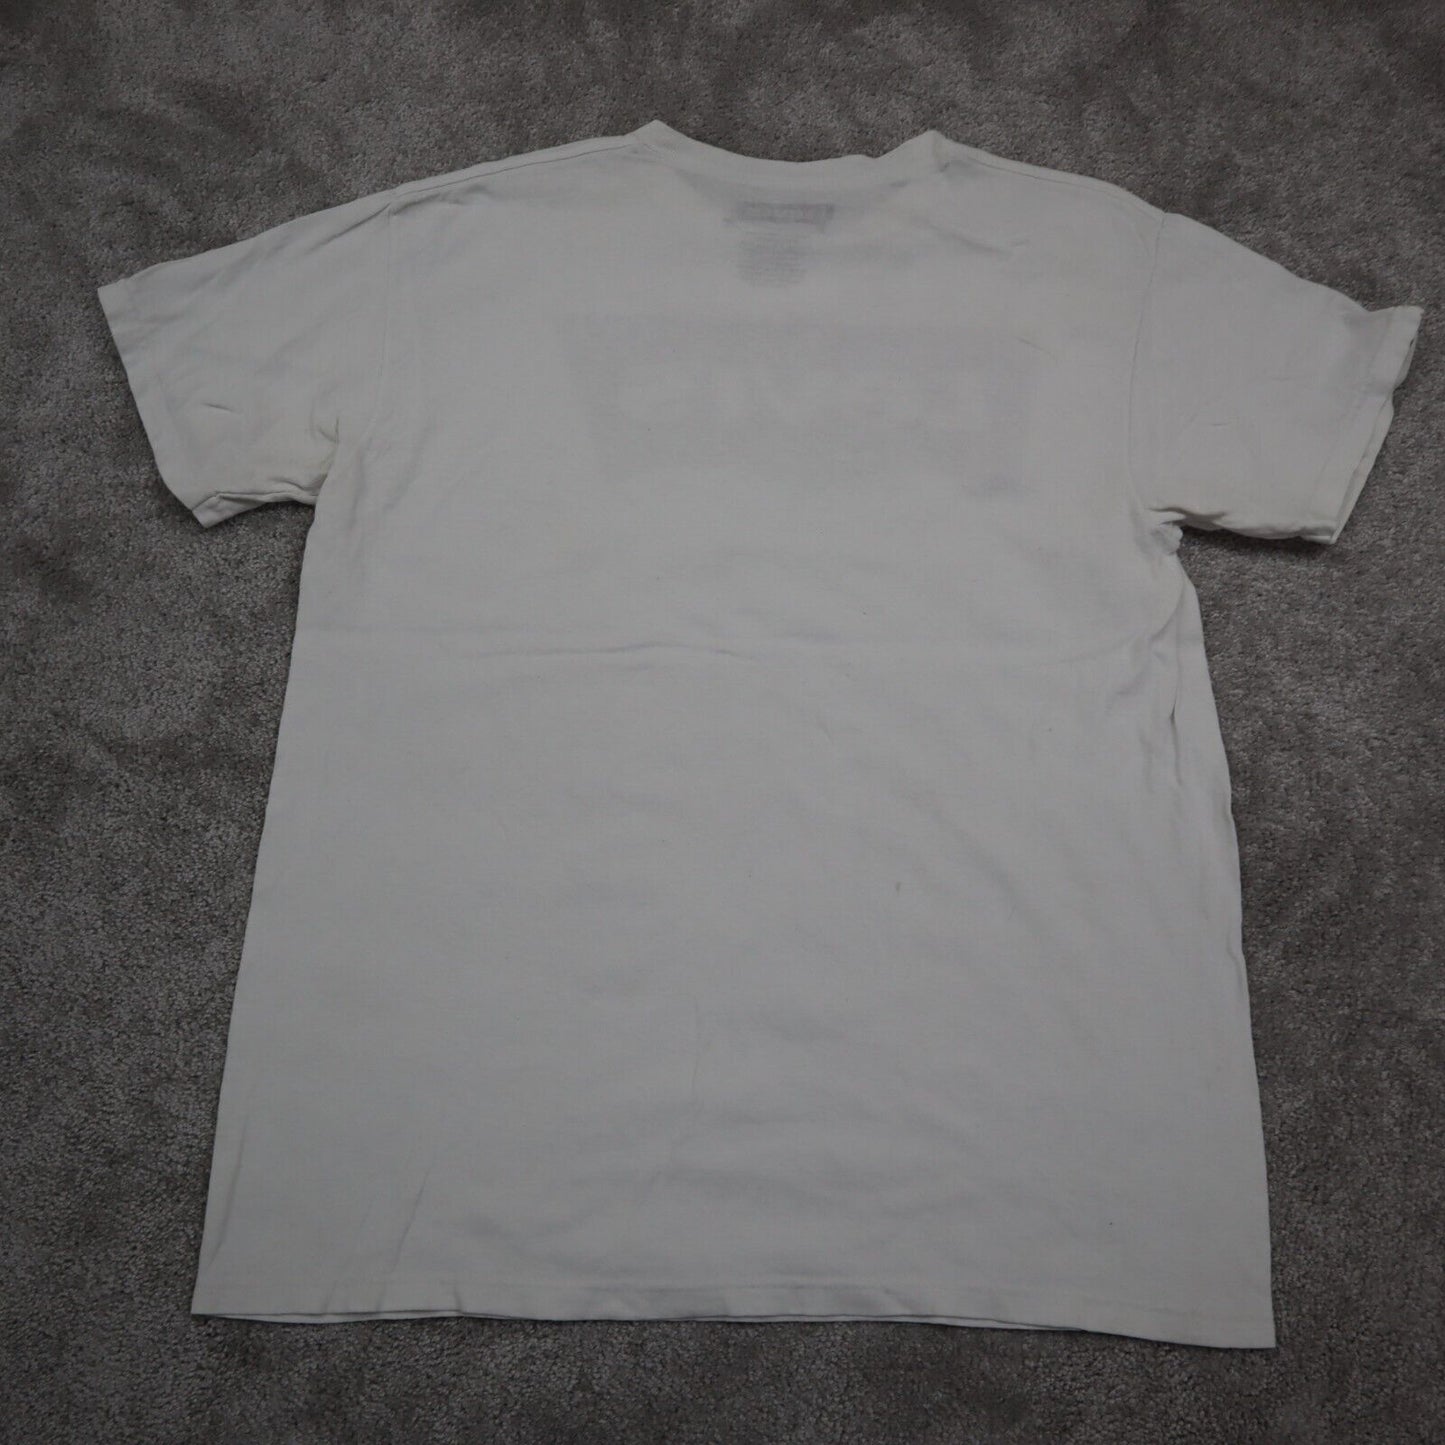 Adidas Sports T-Shirt Men's Large White Short Sleeves Graphic Sports Logo Shirt